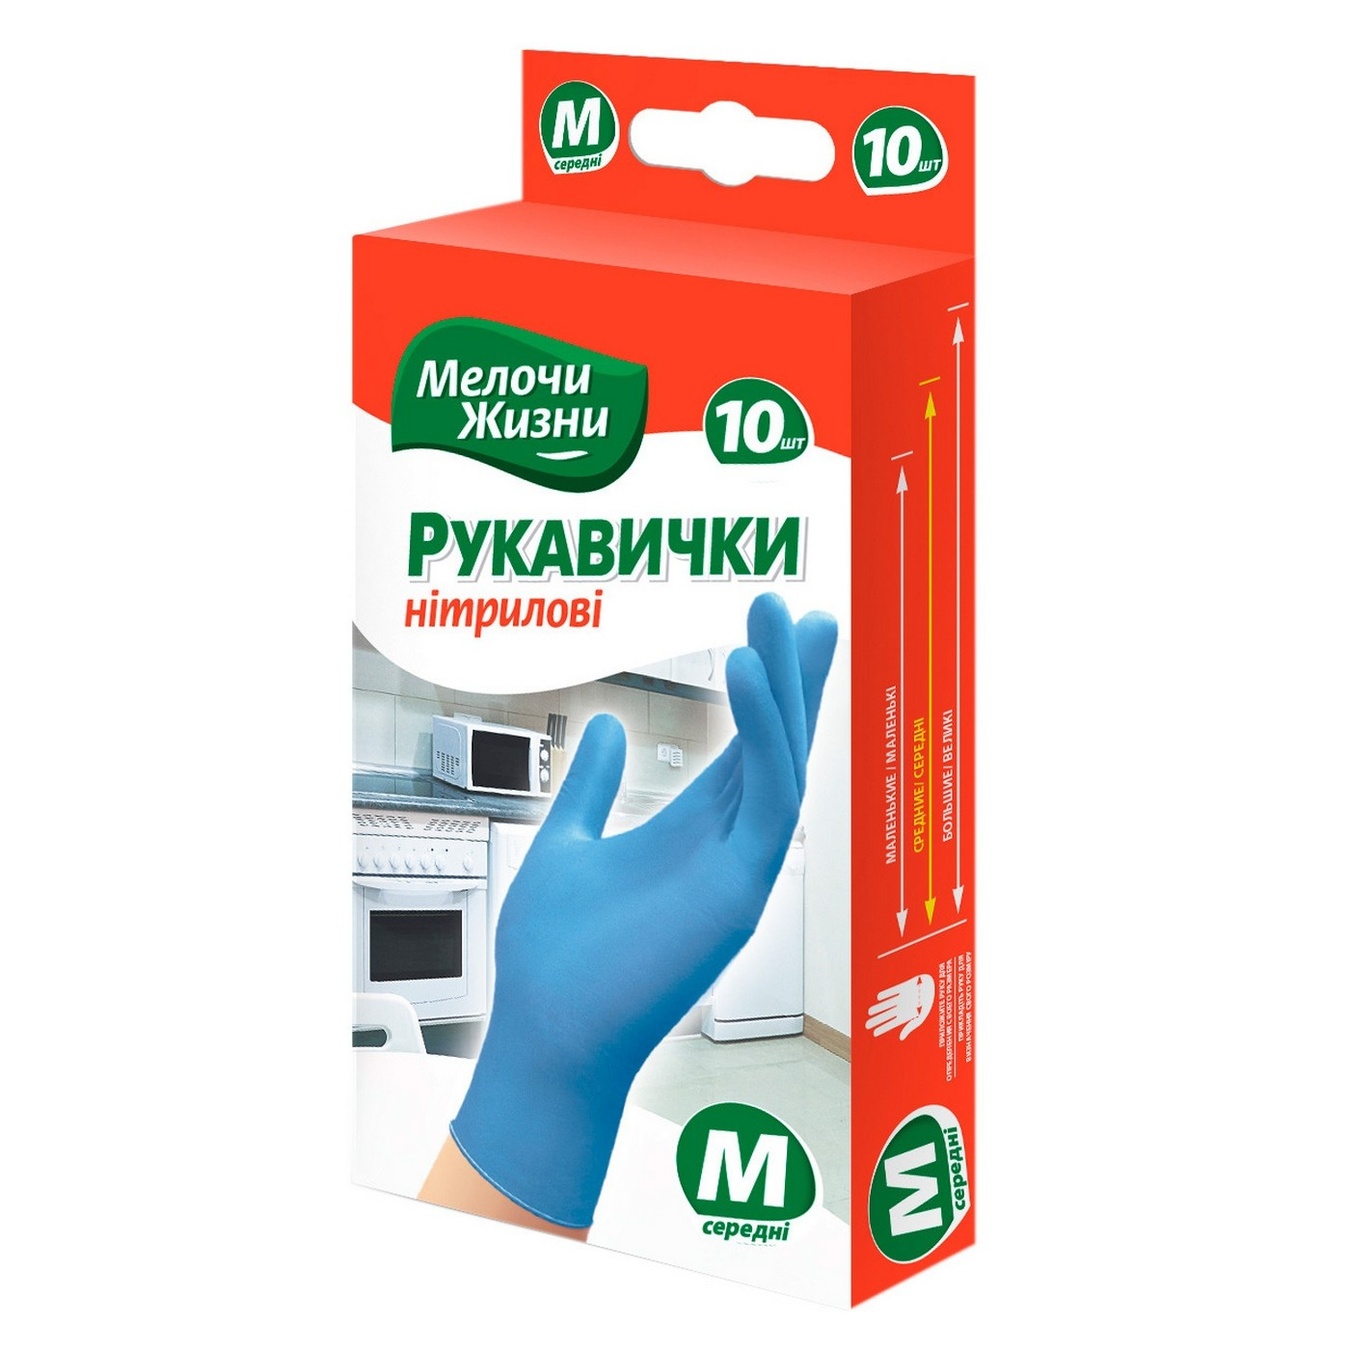 Melochi Zhizni Gloves Nitrile Size M 10pcs